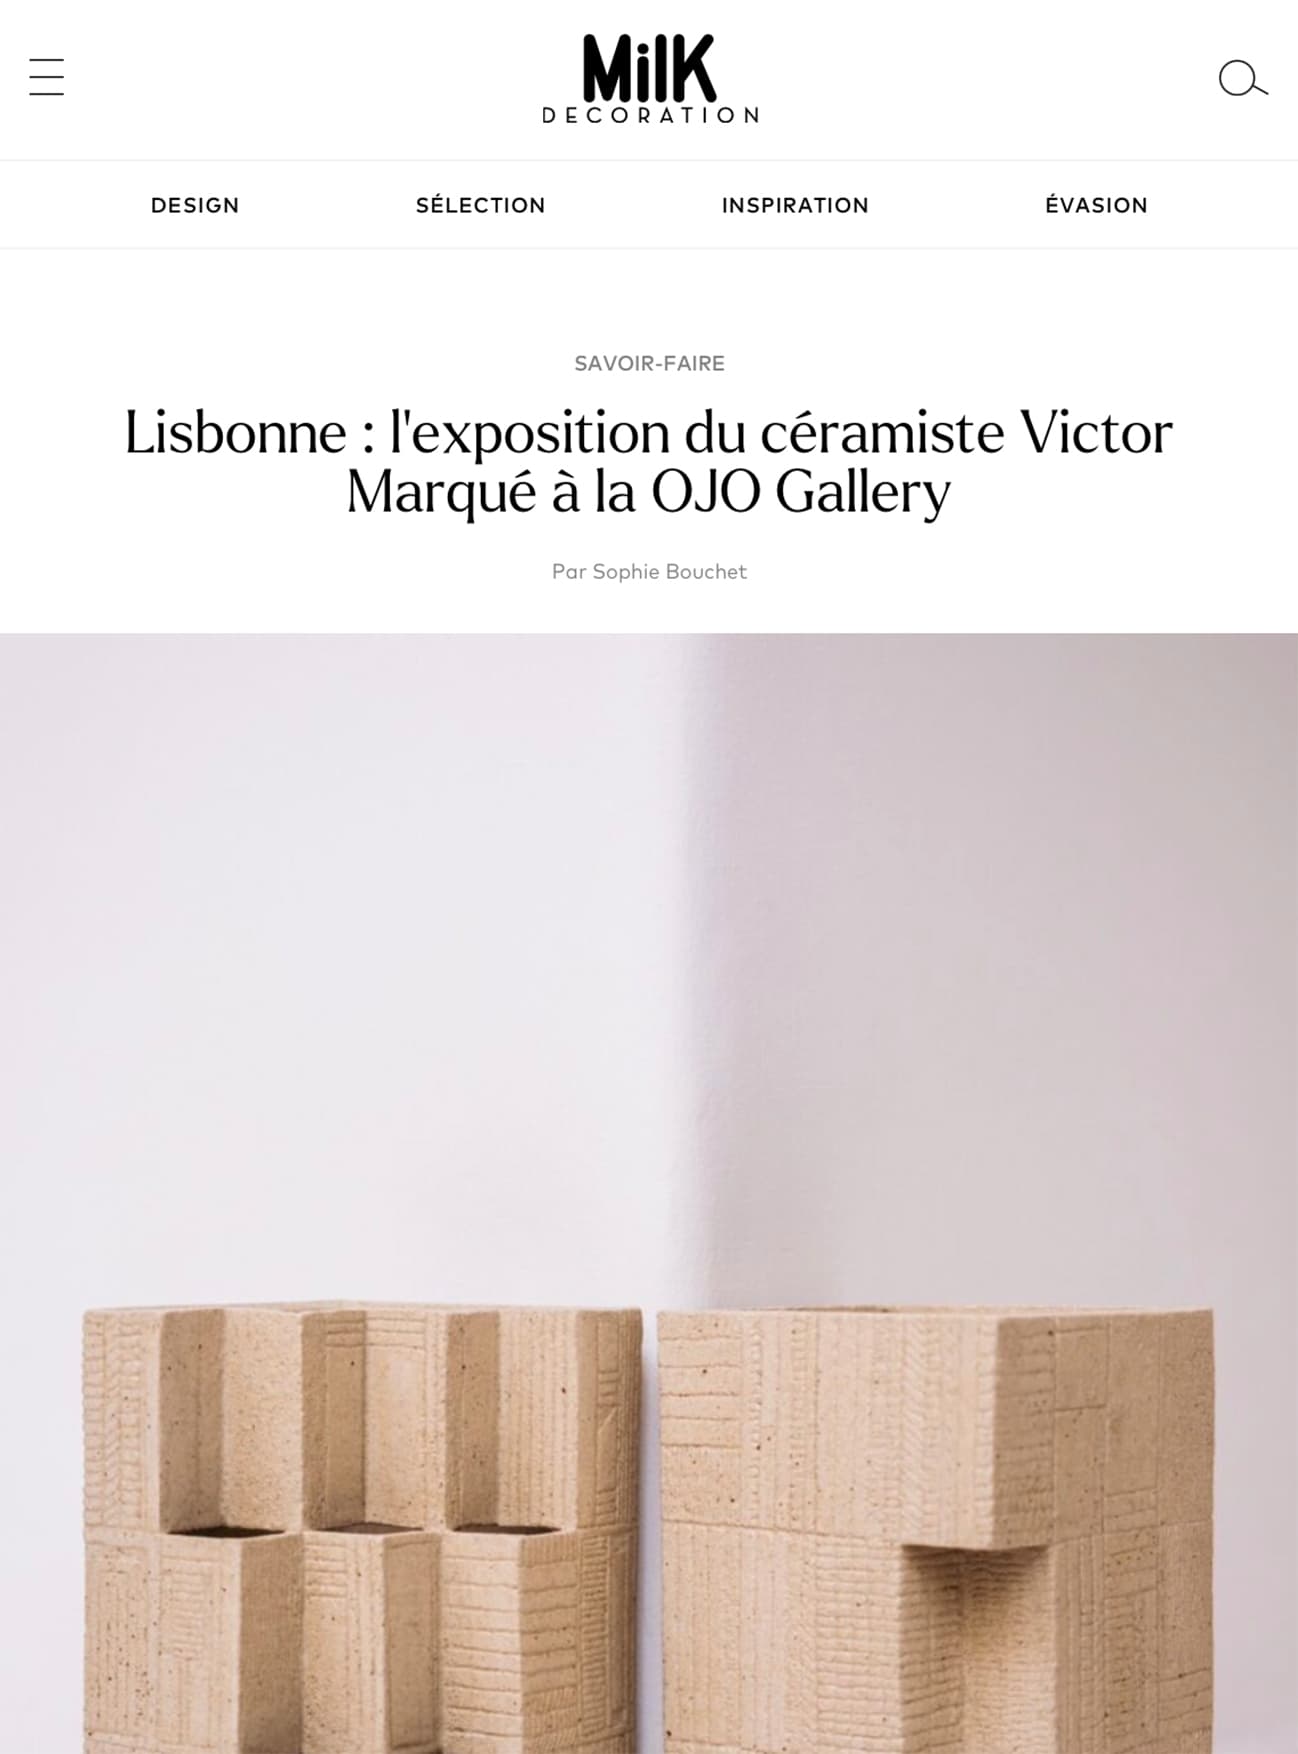 ojo-gallery-marie-de-carvalho-press-lisbon-milk-magazine-cover